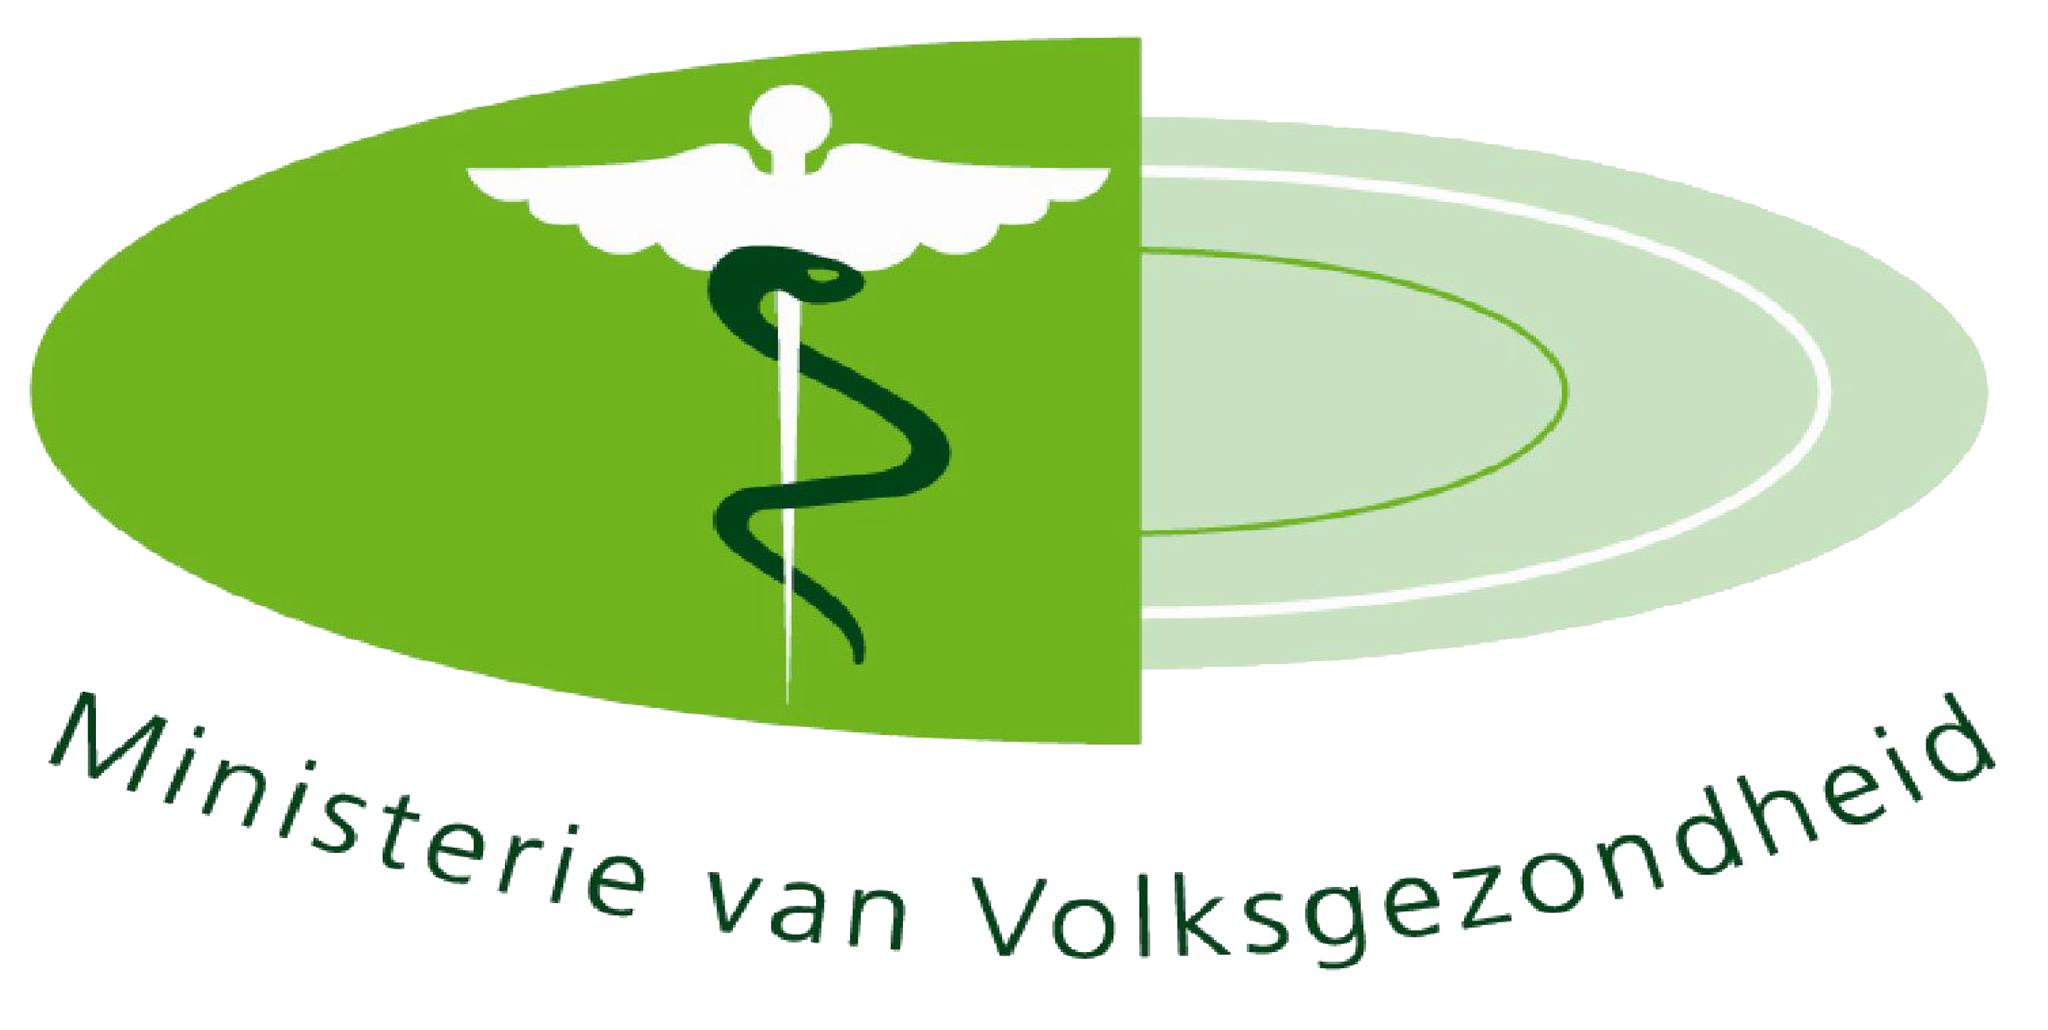 volksgezondheid logo